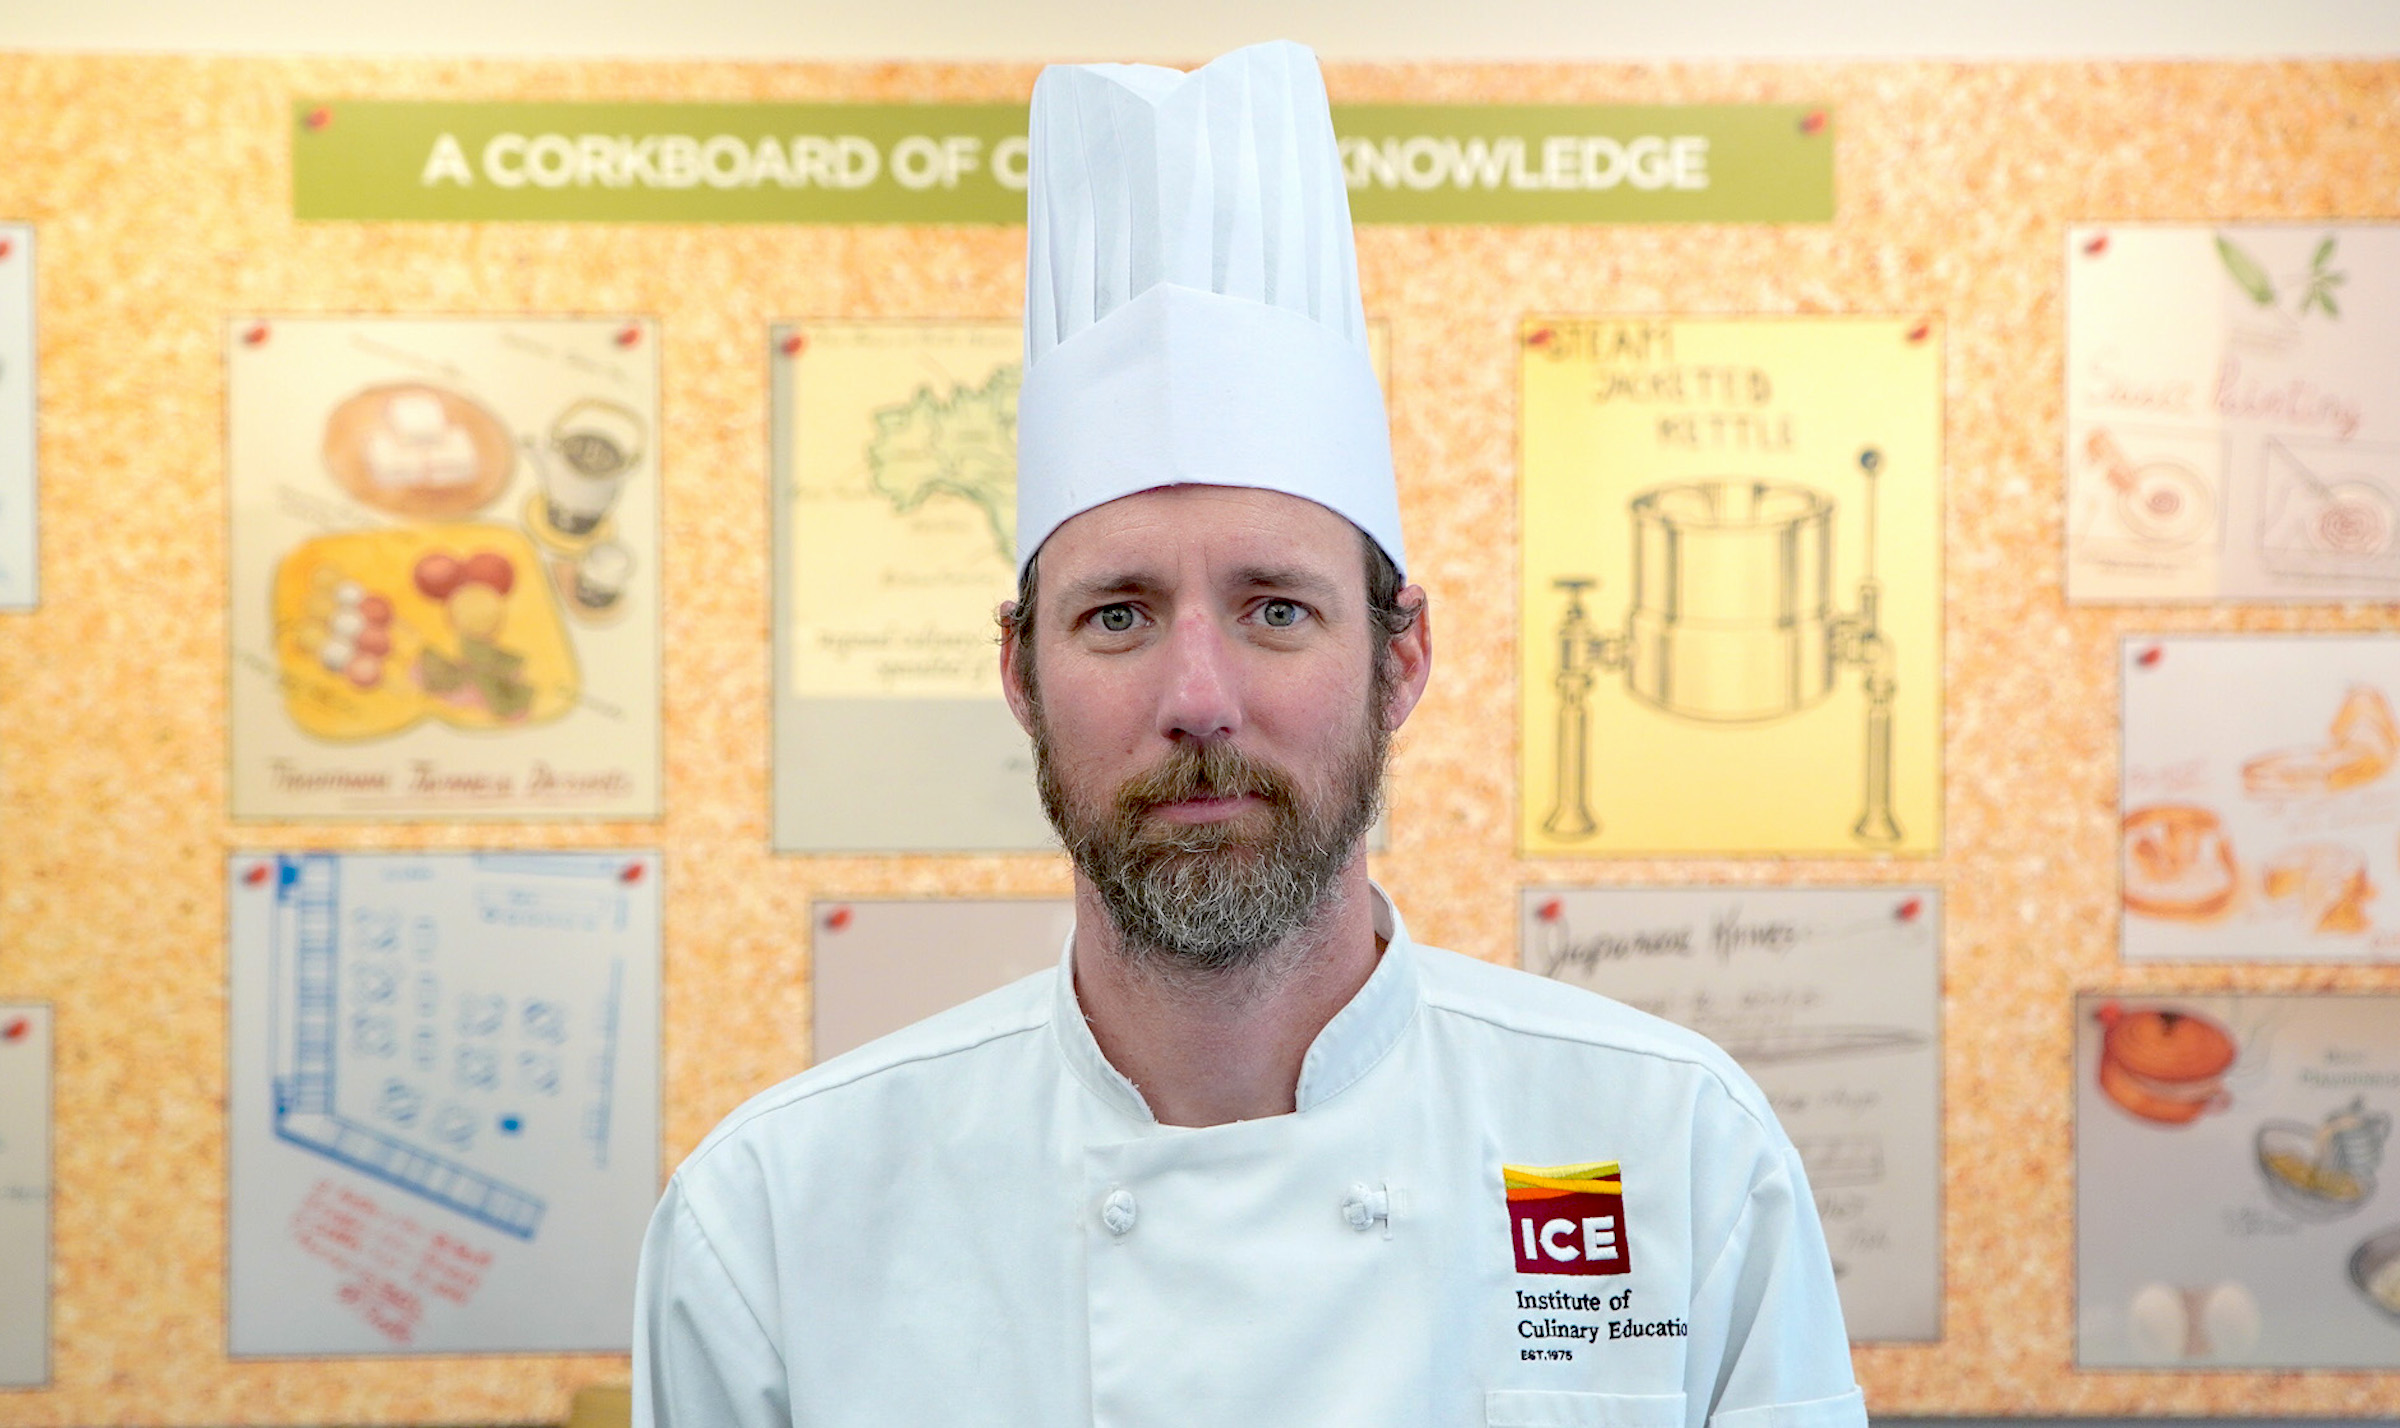 Chef-Instructor Jeff Shields' headshot